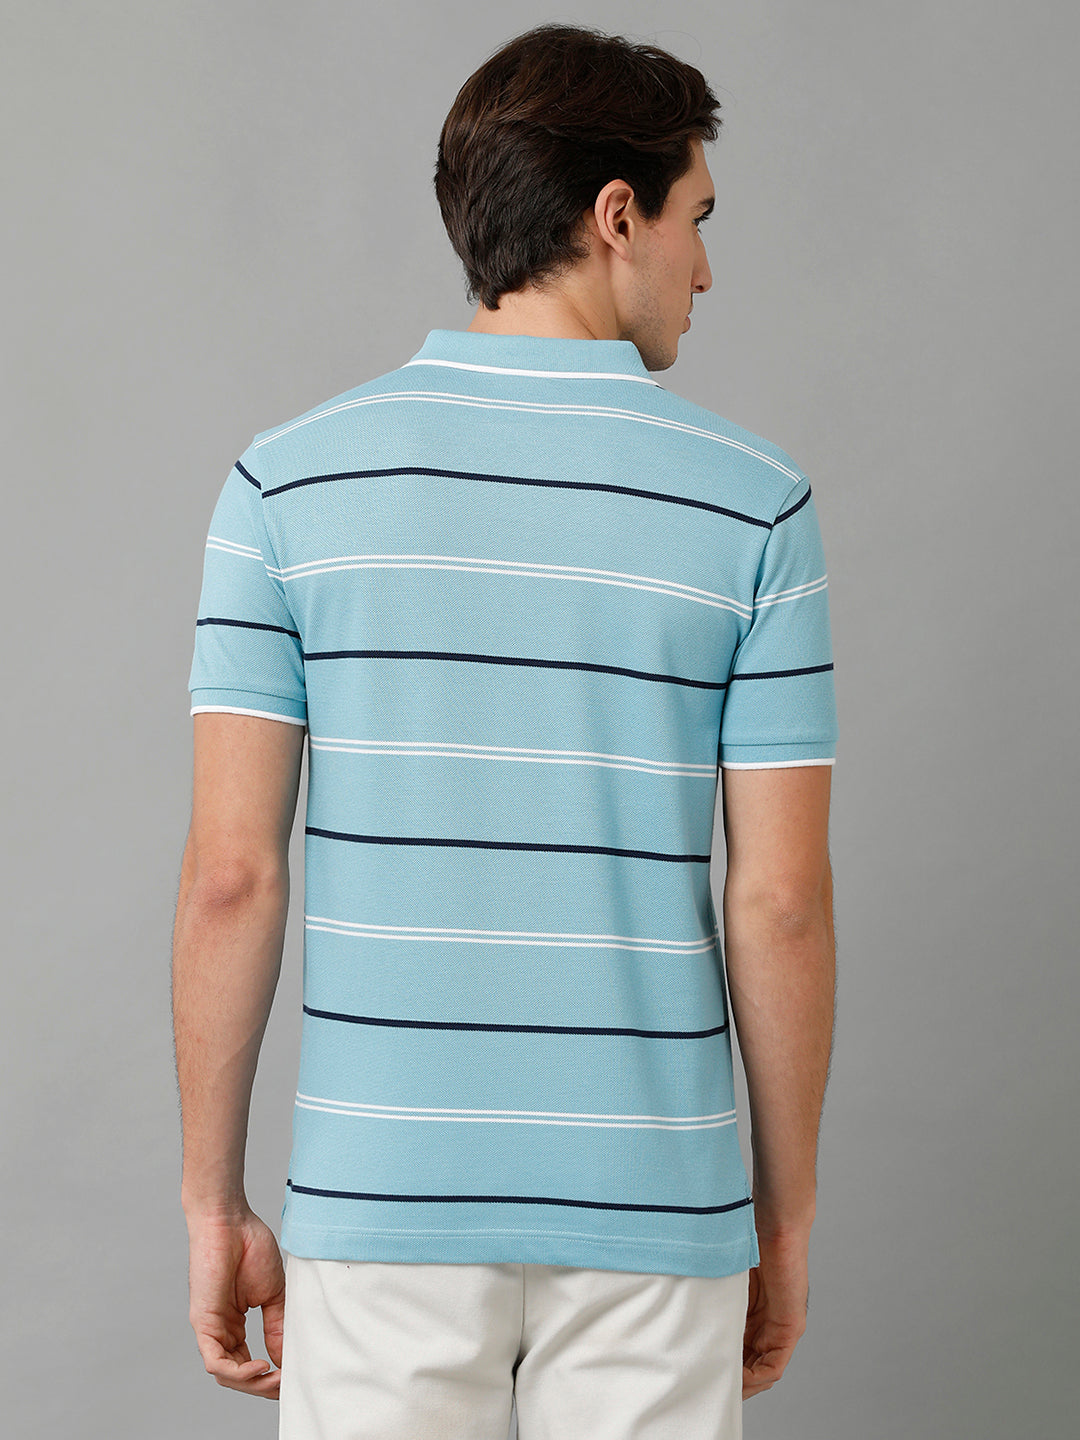 Classic Polo Men's Cotton Blend Striped Half Sleeve Slim Fit Polo Neck Blue Color T-Shirt | Adore - 196 B